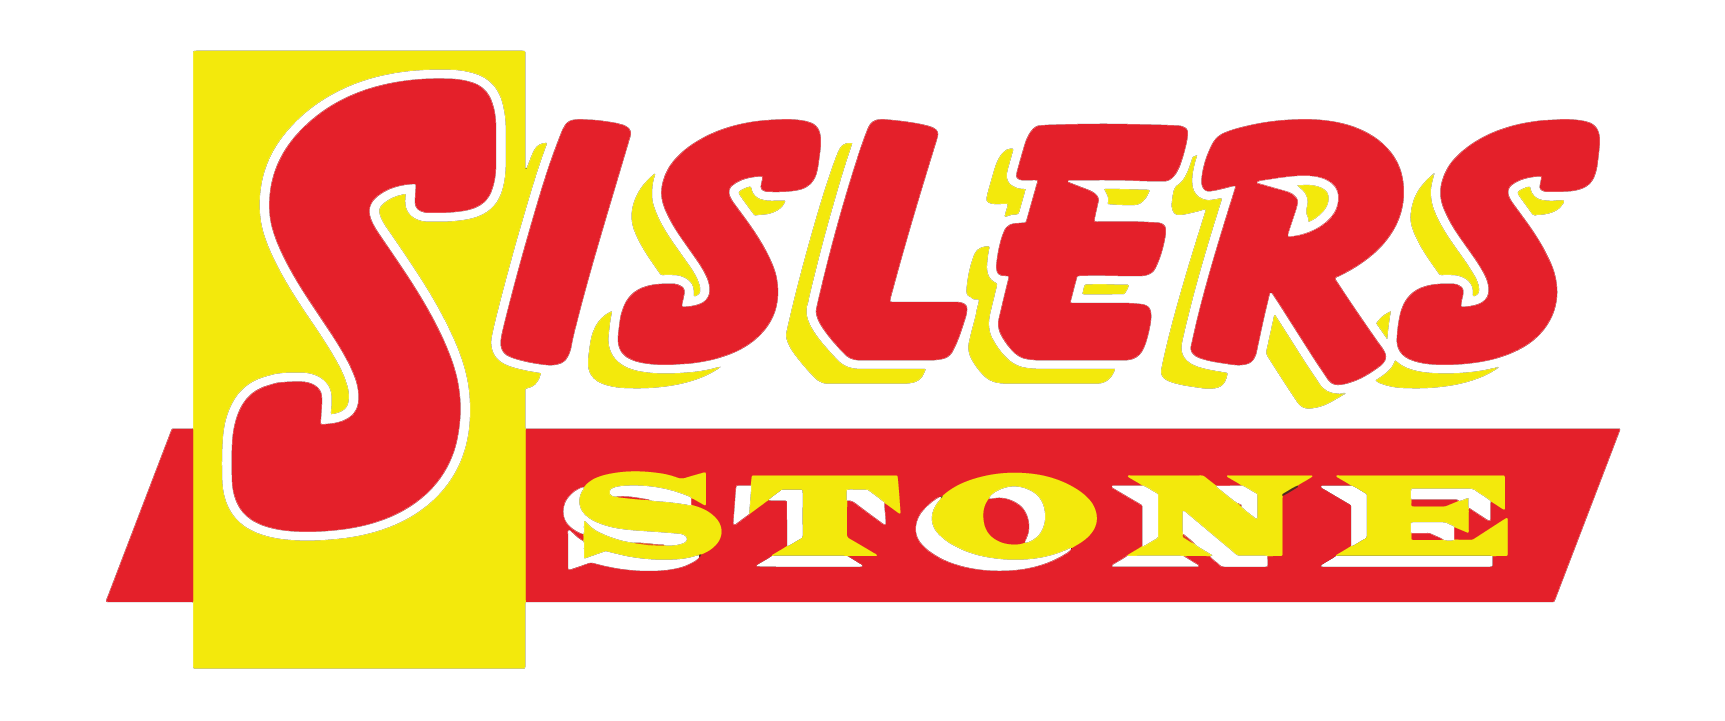 Sislers Stone Logo